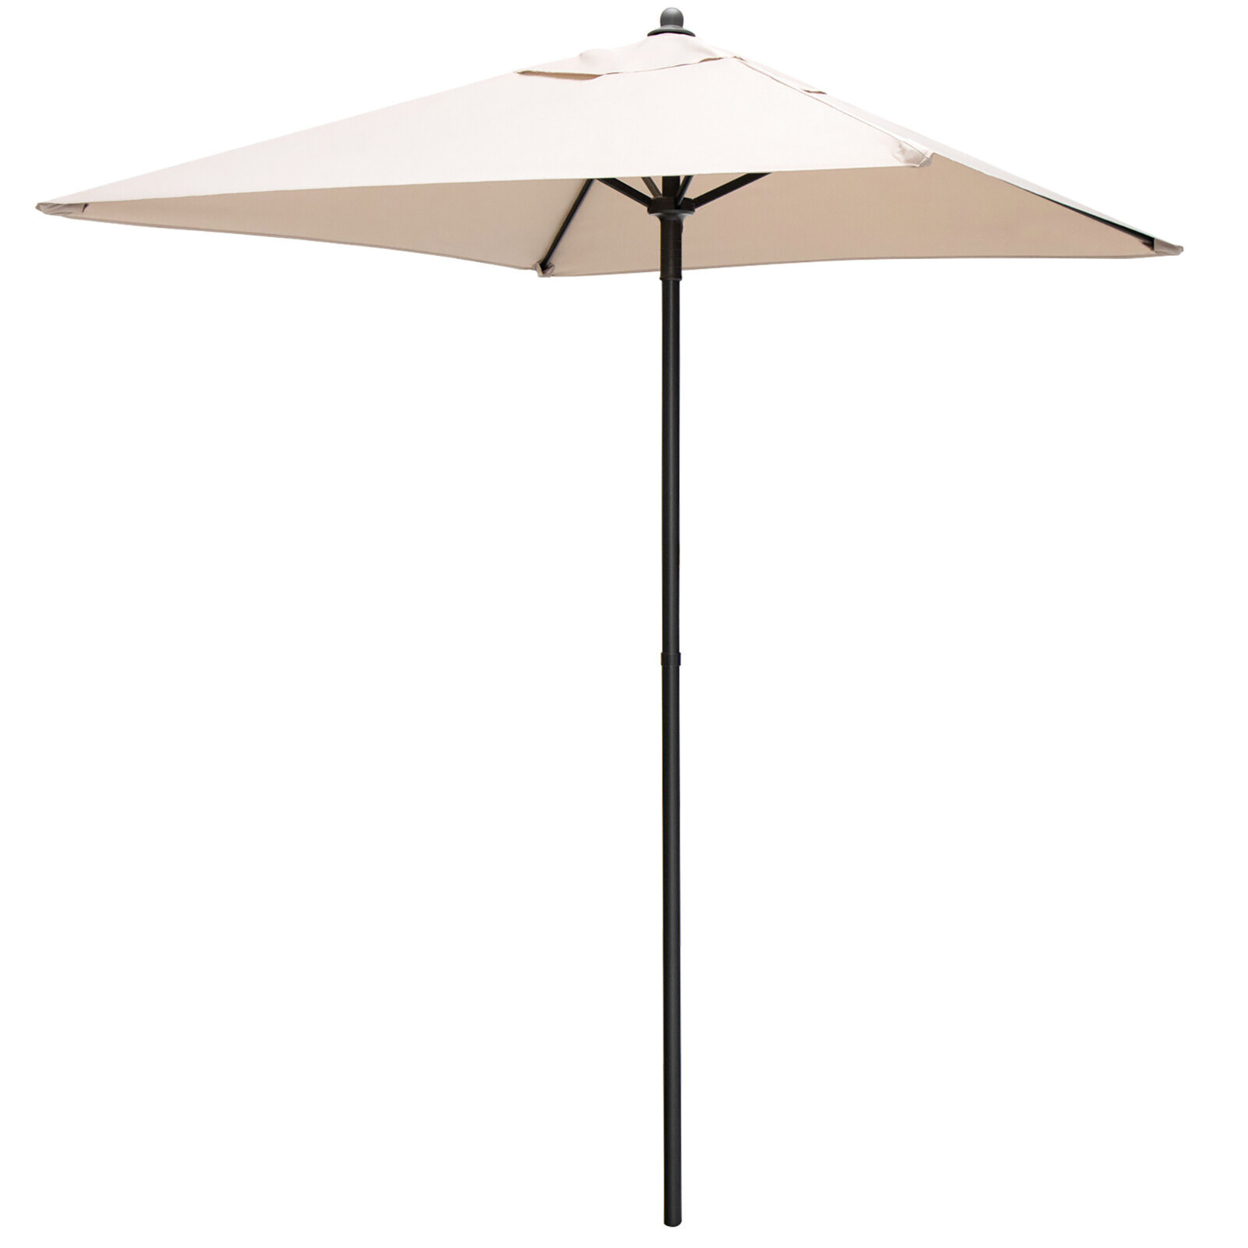 5ft Patio Square Market Table Umbrella Shelter 4 Sturdy Ribs